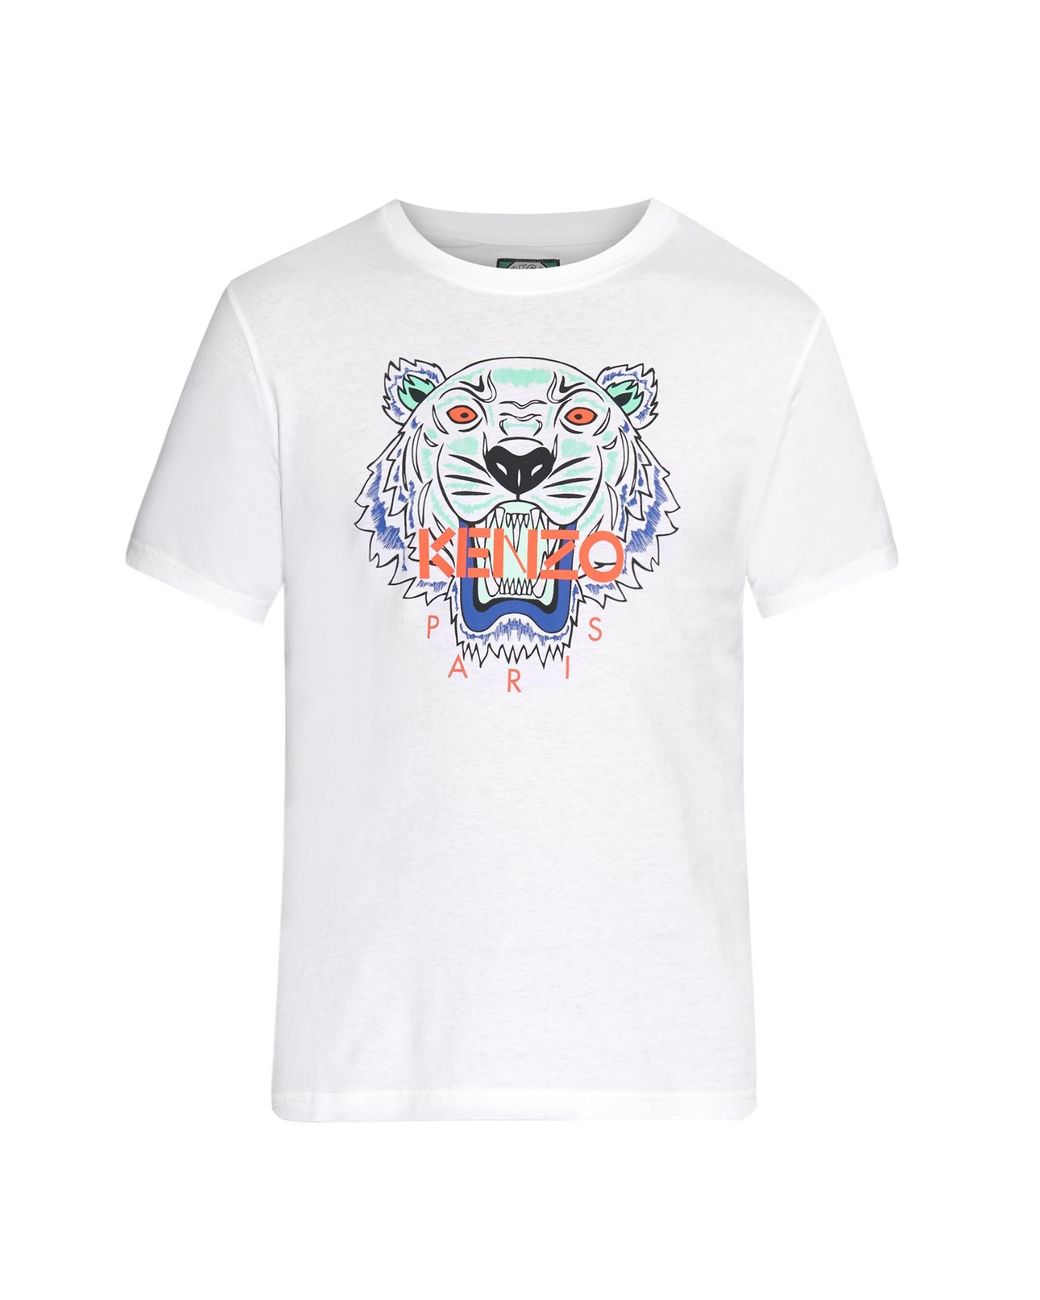 KENZO Tiger-Print T-Shirt in White for Men | Lyst